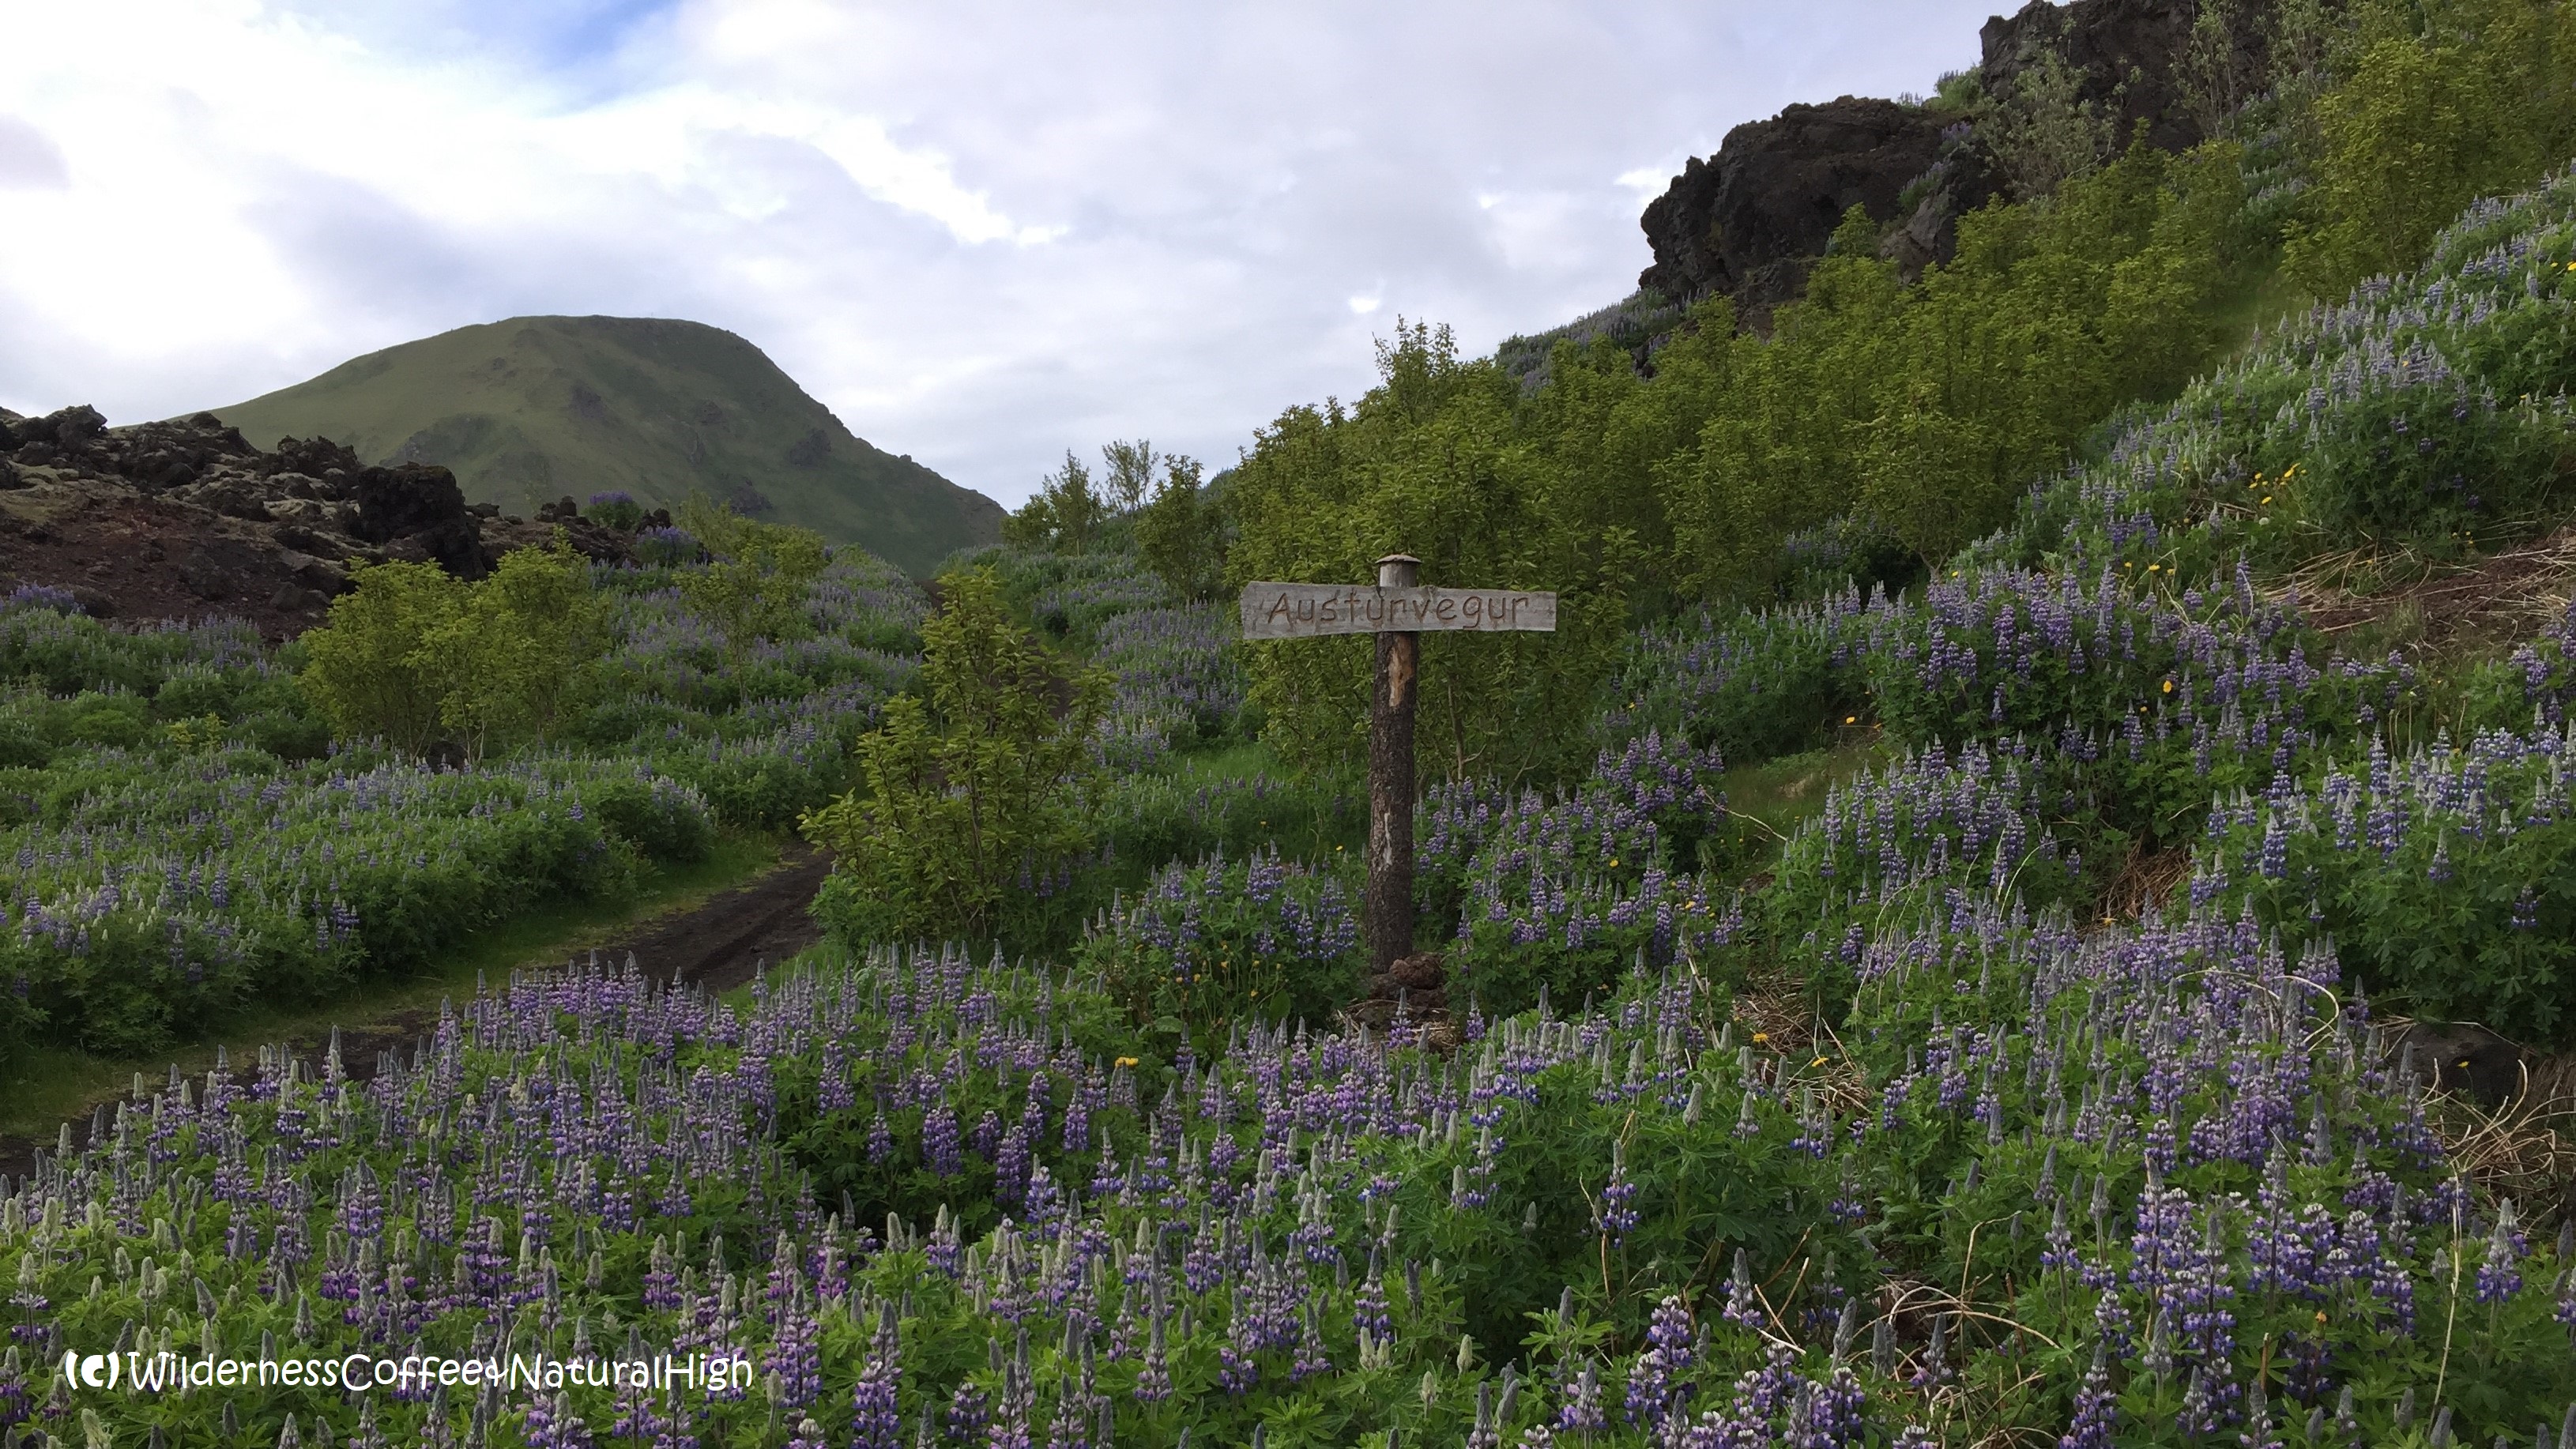 Memorial signpost Austurvegur, Eldfell volcano, Heimaey, Vestmannaeyjar, Iceland